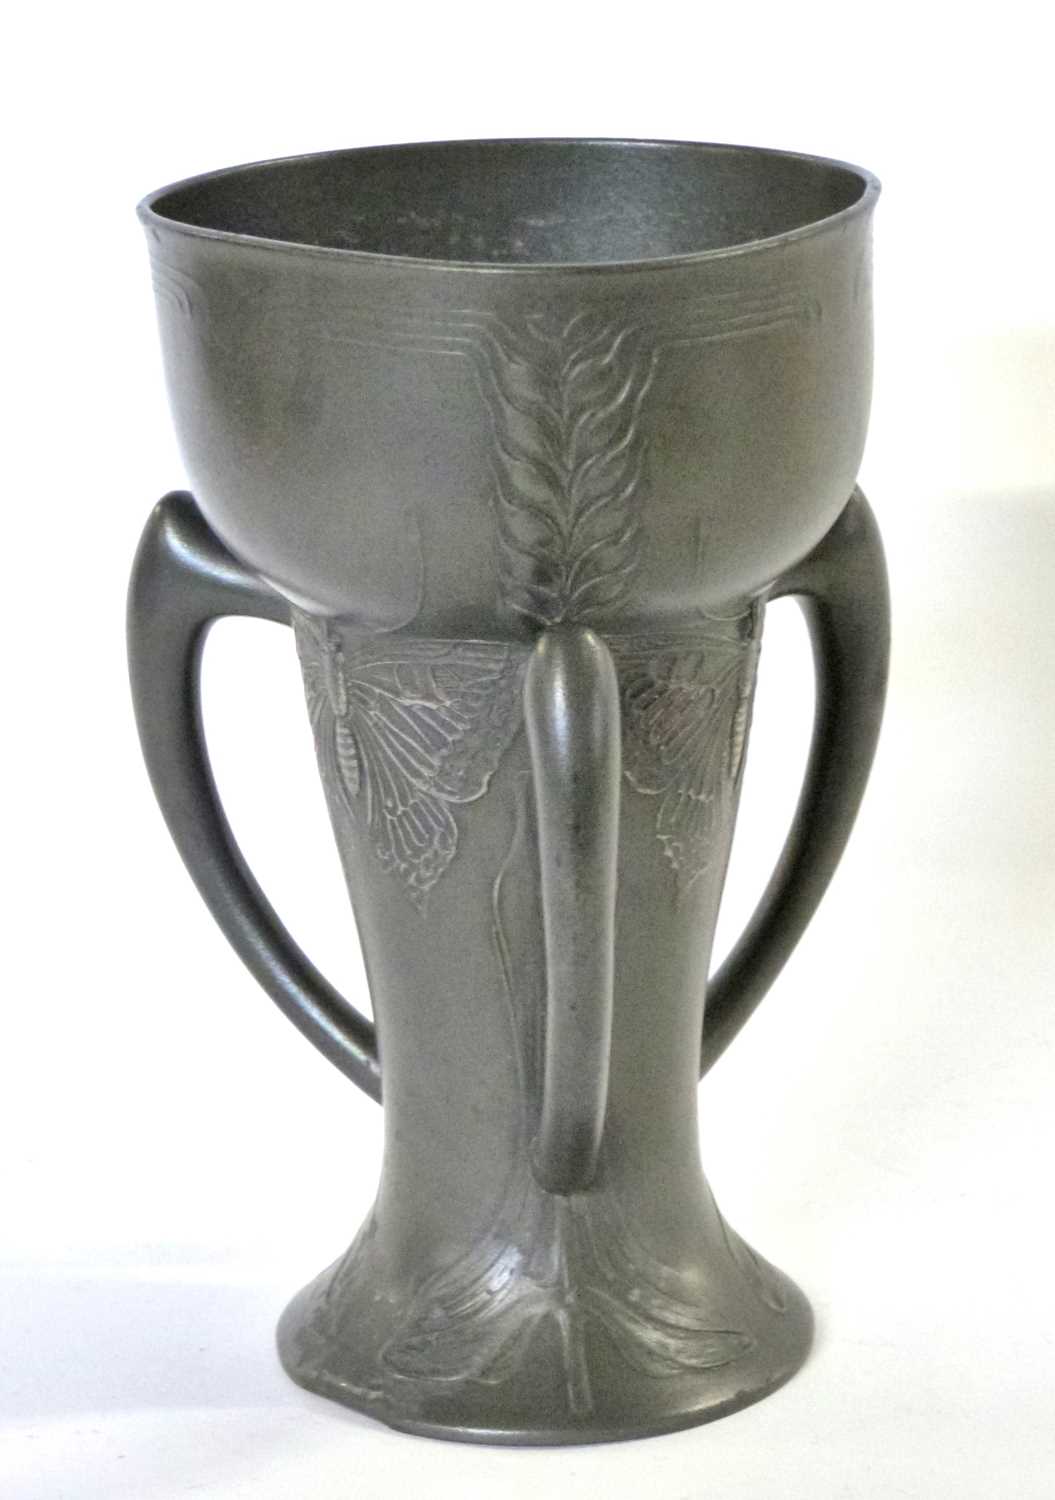 A German Jugendstil three handled pewter vase c1900 by the Kayserzinn Factory. Designer Hugo